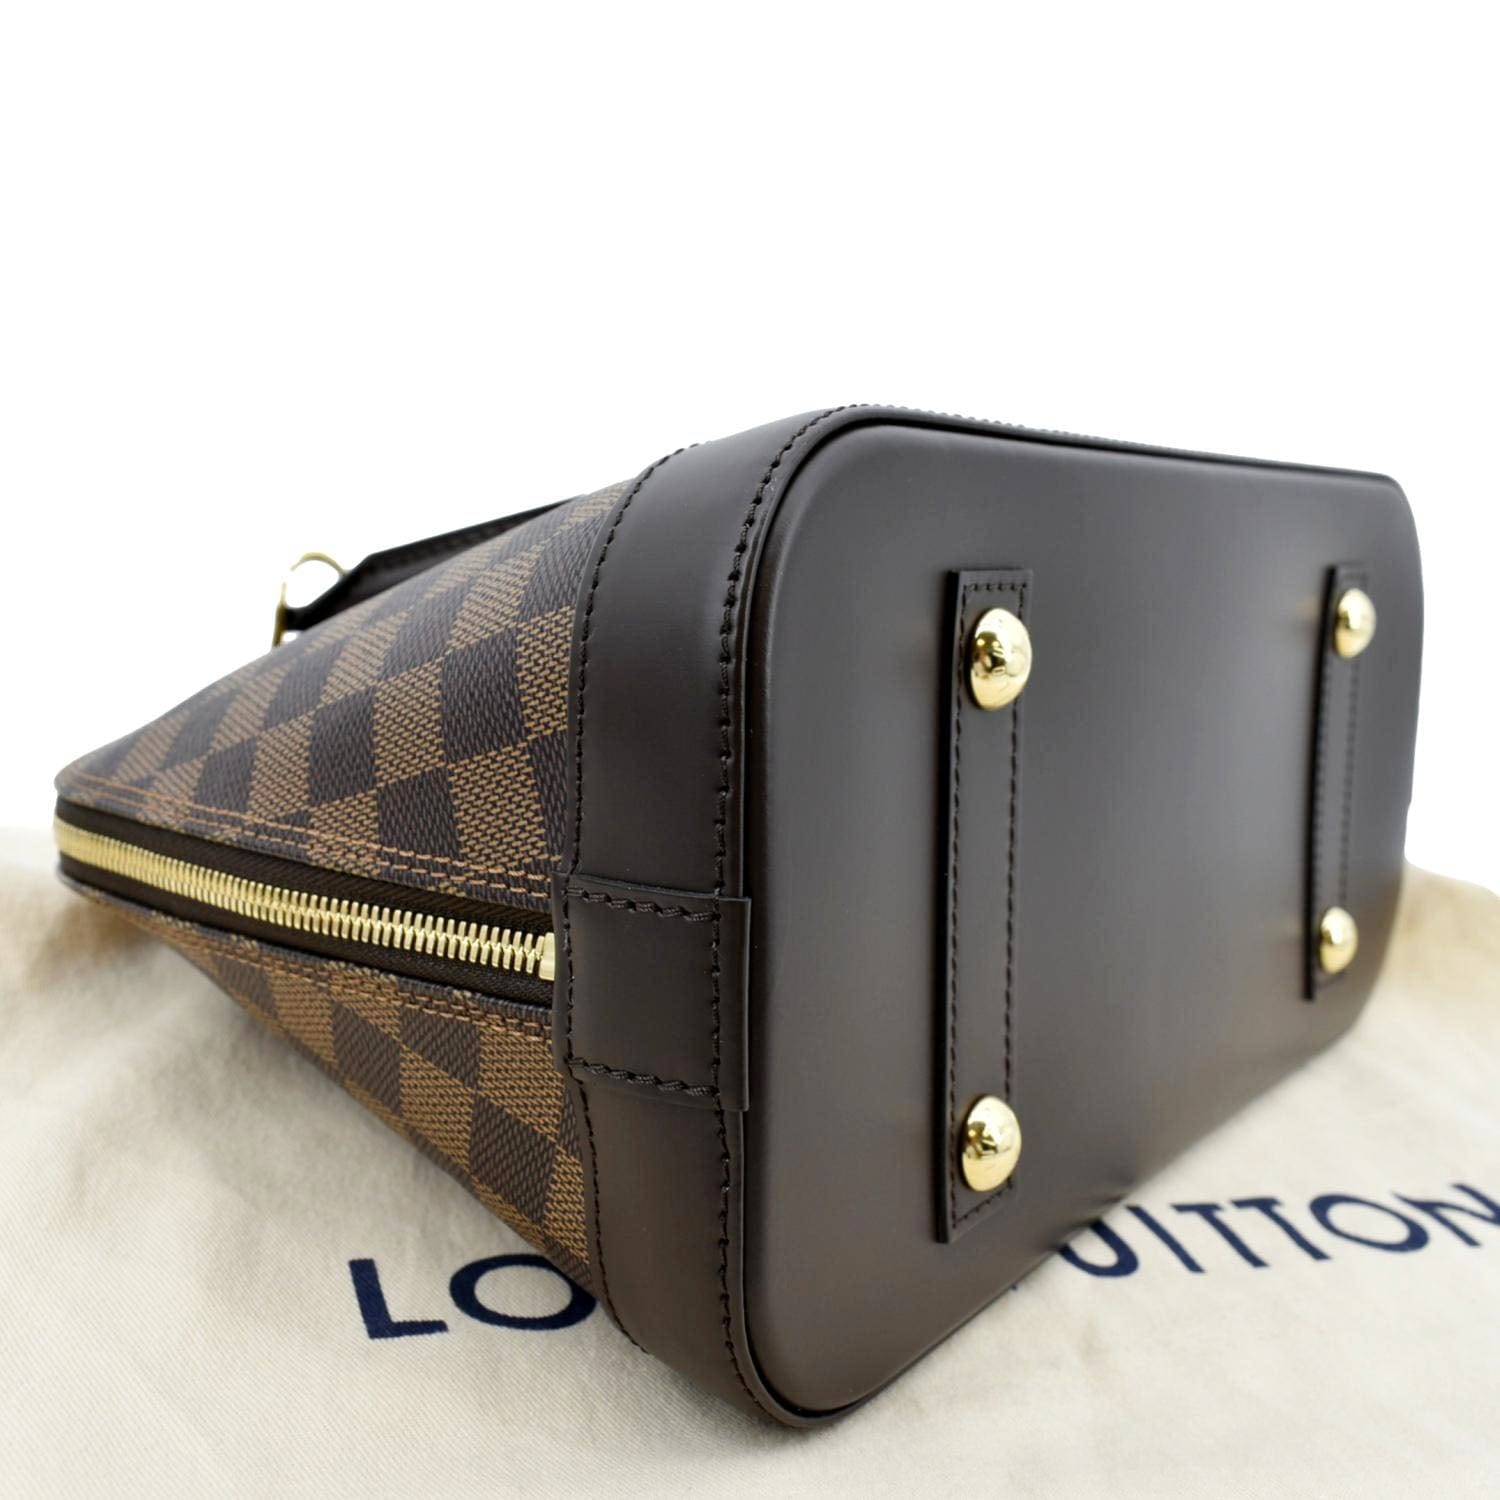 Brown Louis Vuitton Damier Ebene Alma PM Handbag